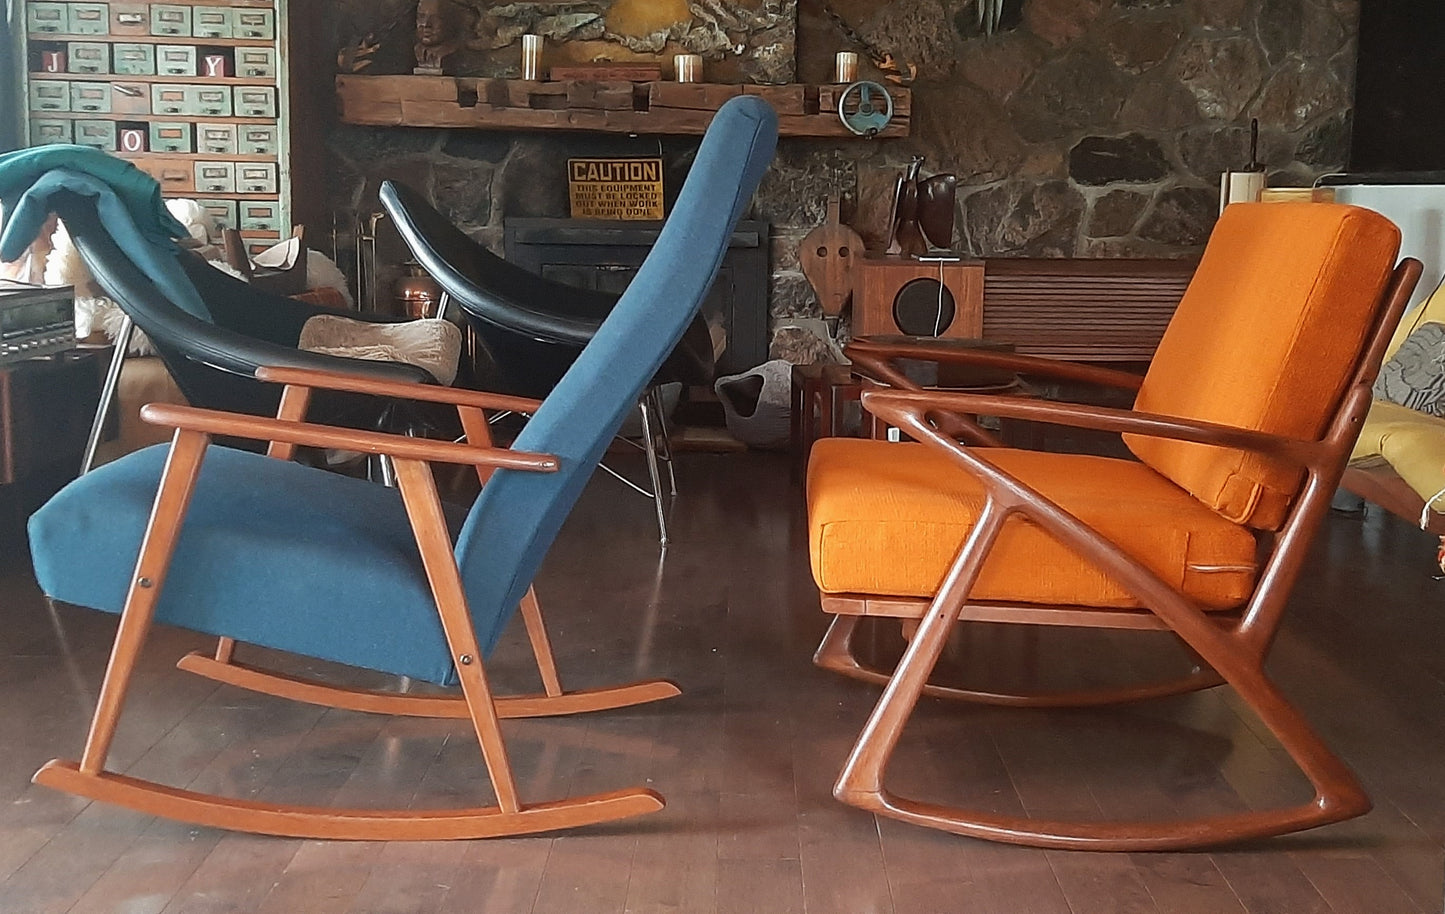 REFINISHED Danish Mid Century Modern Teak Rocking Chair NEW Wool Upholstery, Perfect